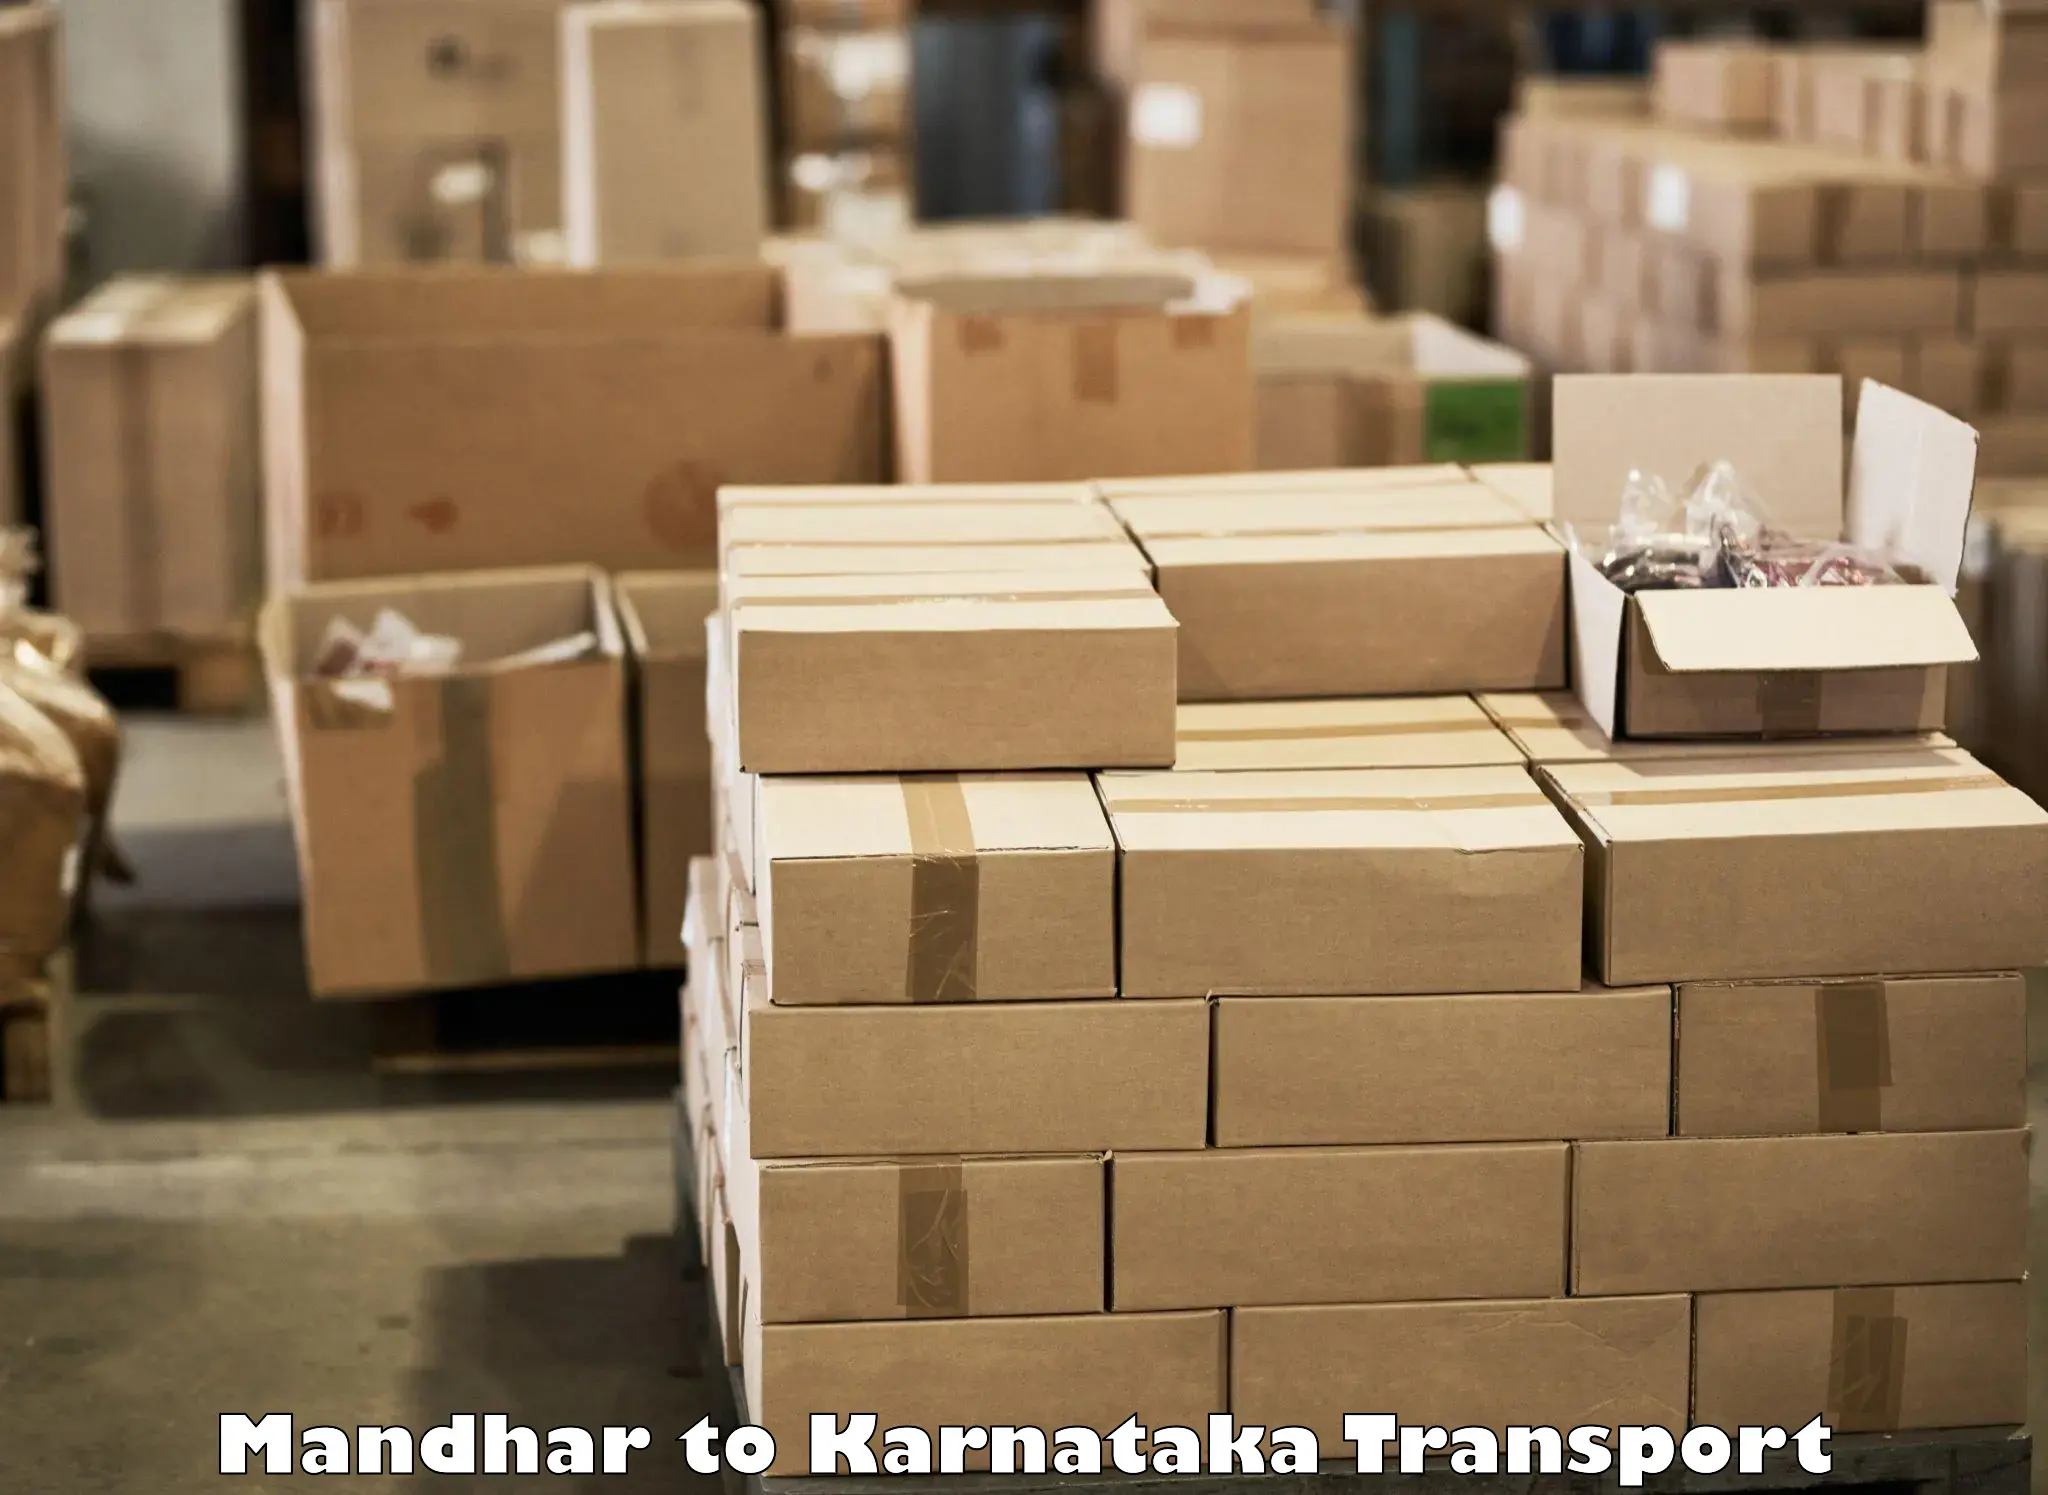 Part load transport service in India Mandhar to Bengaluru